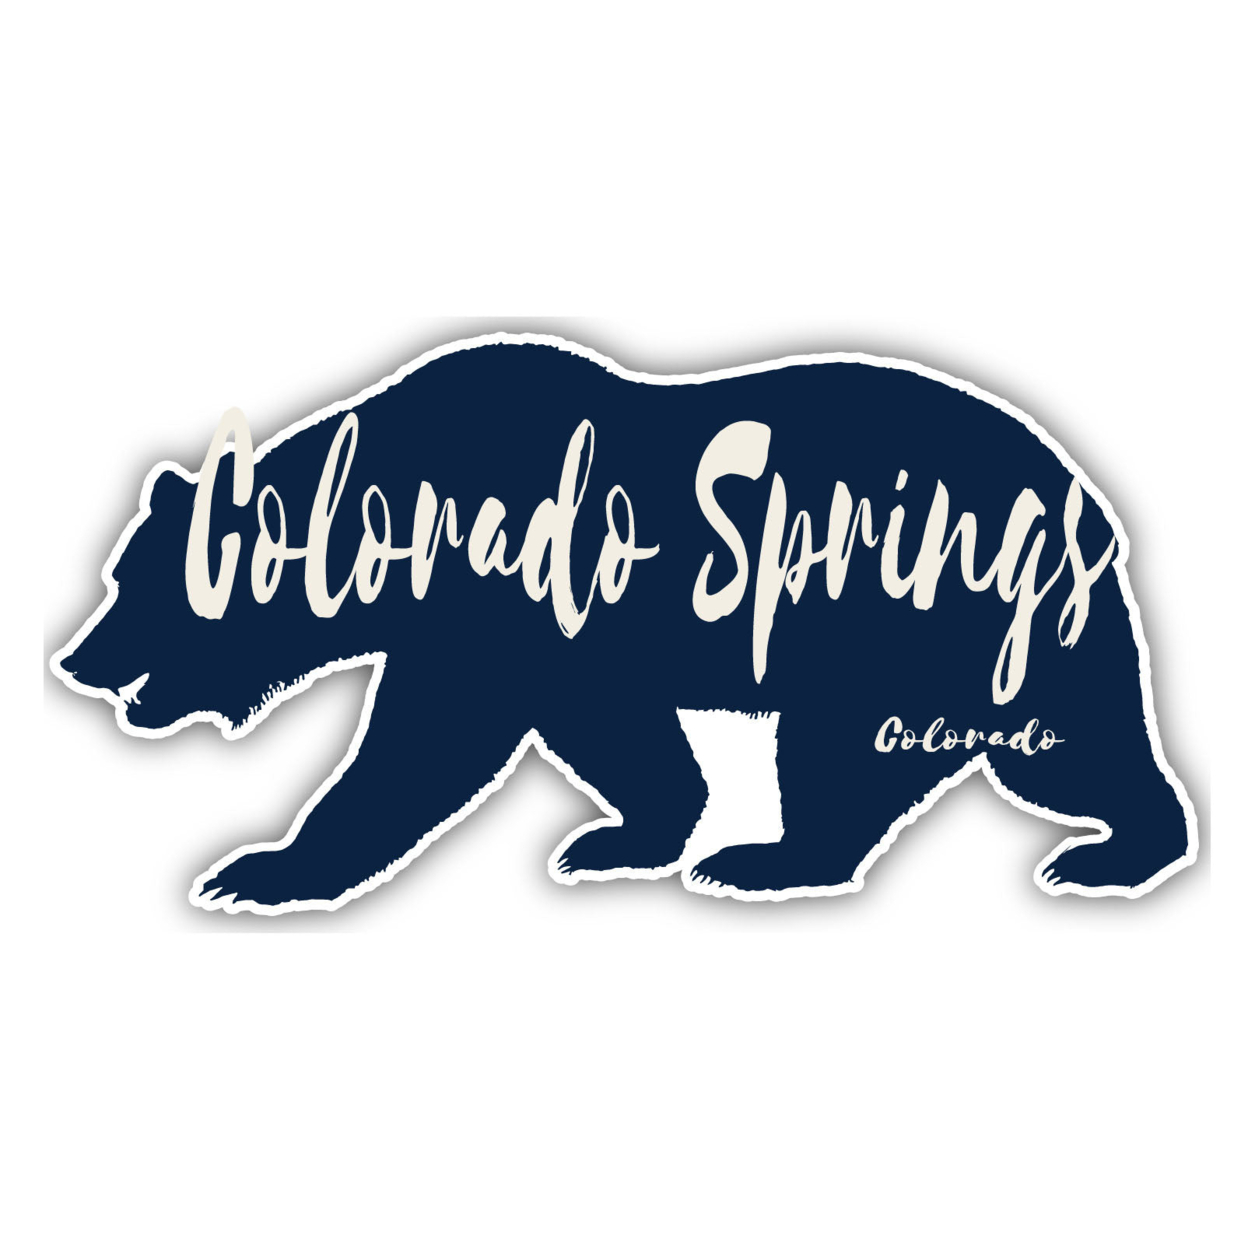 Colorado Springs Colorado Souvenir Decorative Stickers (Choose Theme And Size) - 4-Pack, 4-Inch, Bear